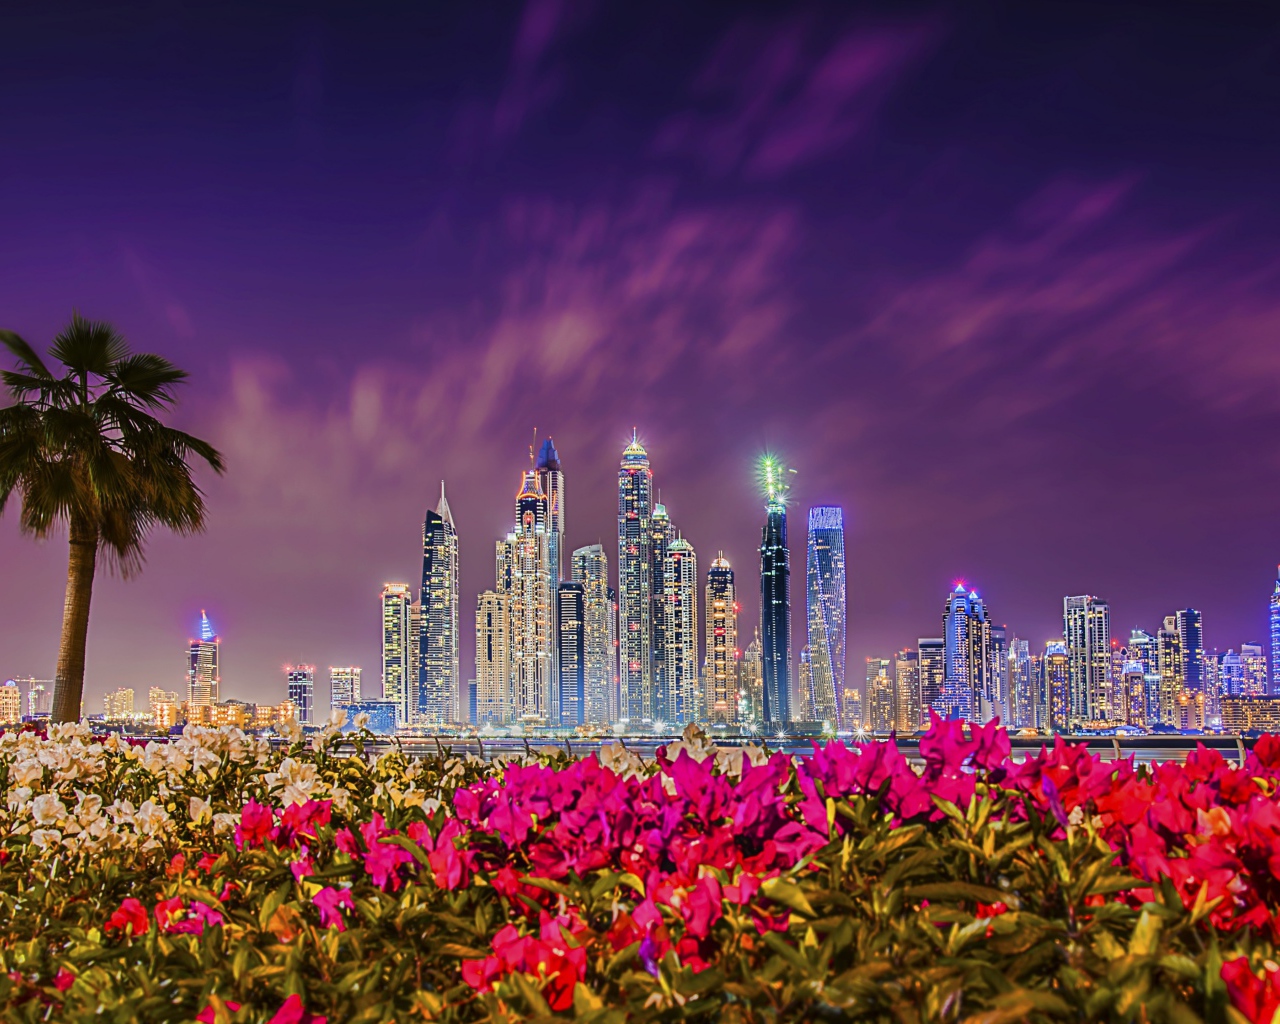 View of night skyscrapers in Dubai